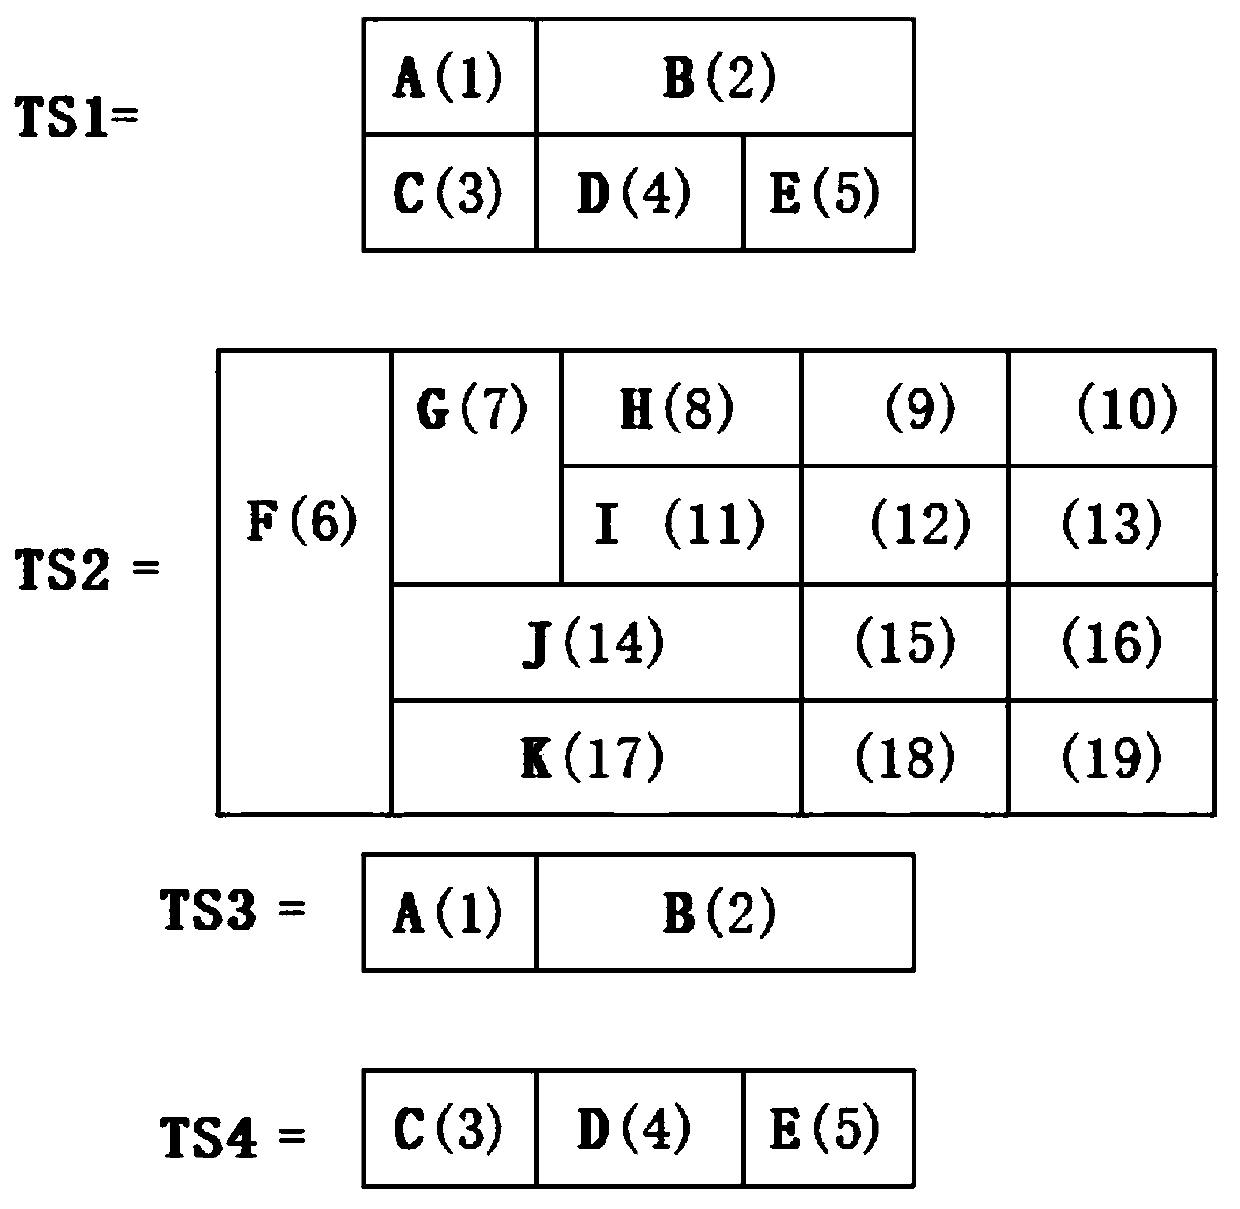 Table splitting and data extracting method based on logic tree